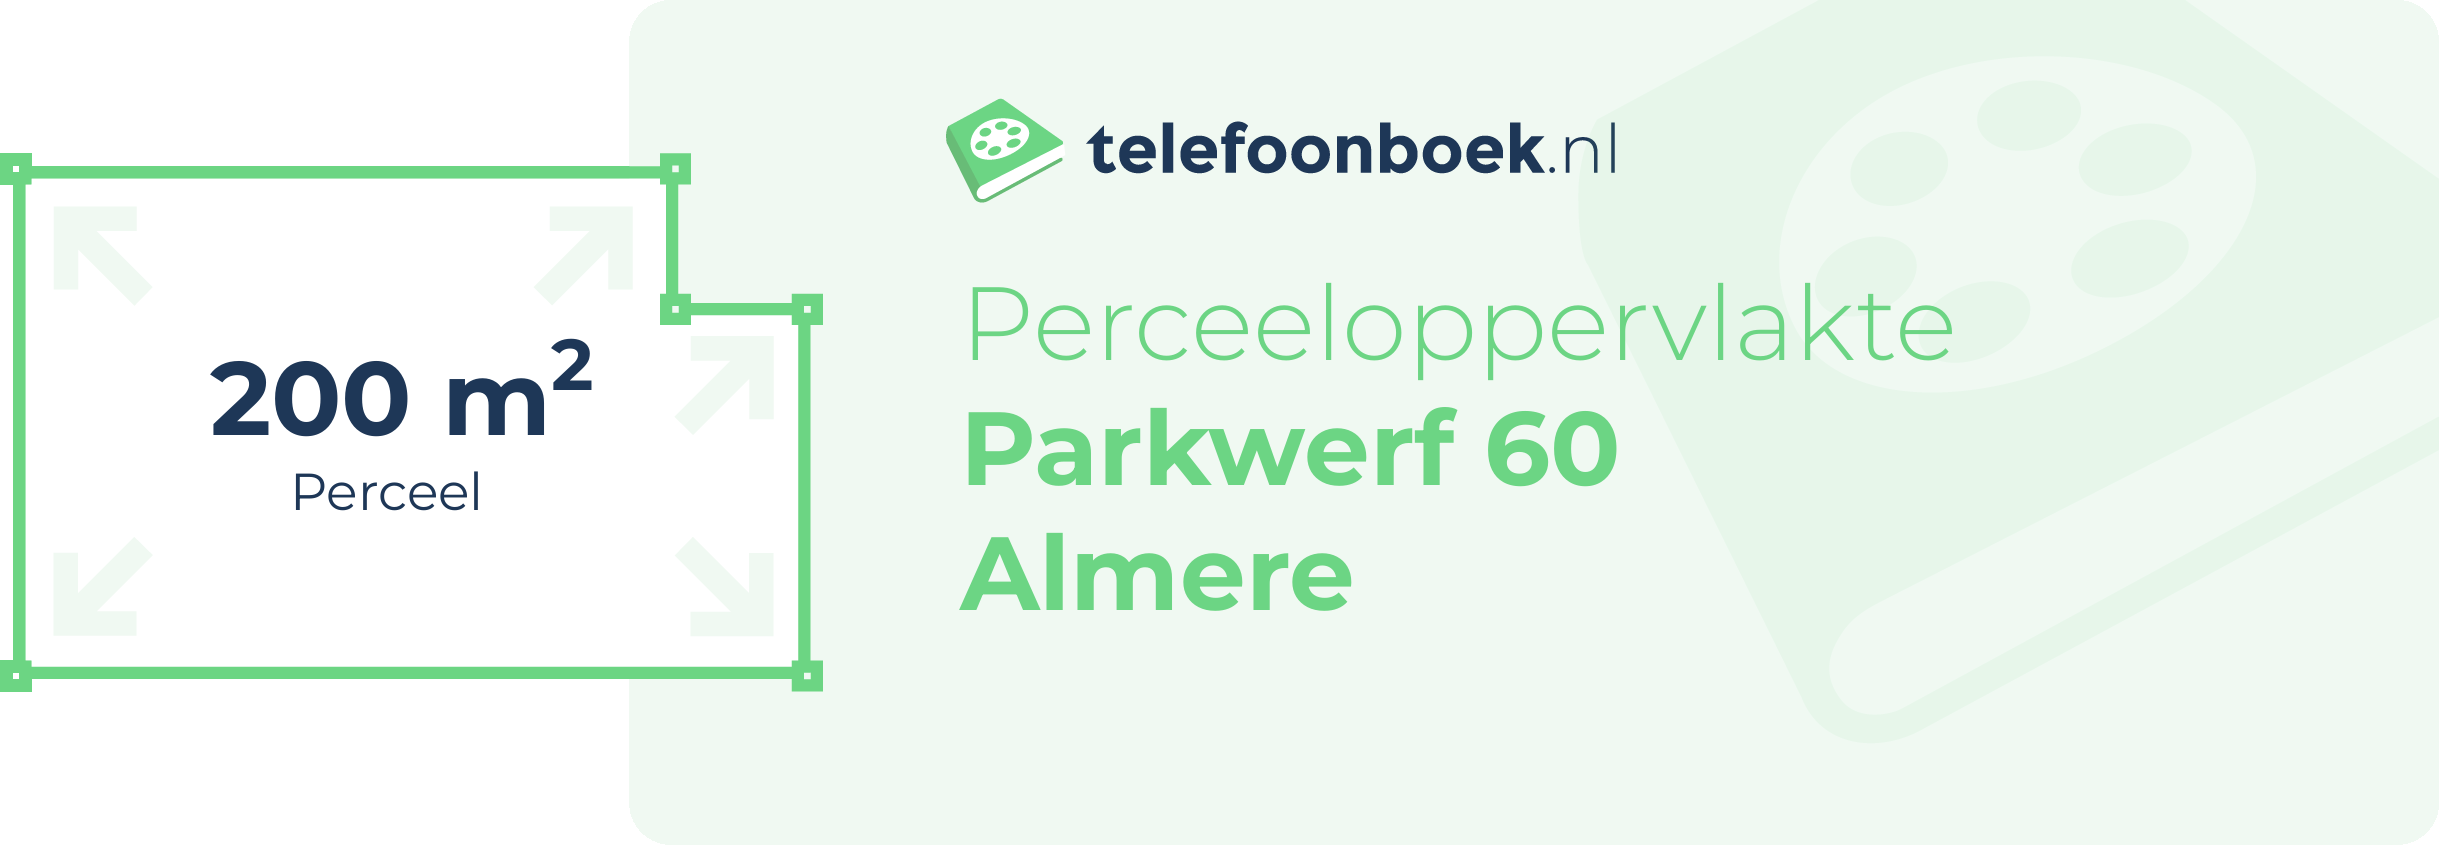 Perceeloppervlakte Parkwerf 60 Almere